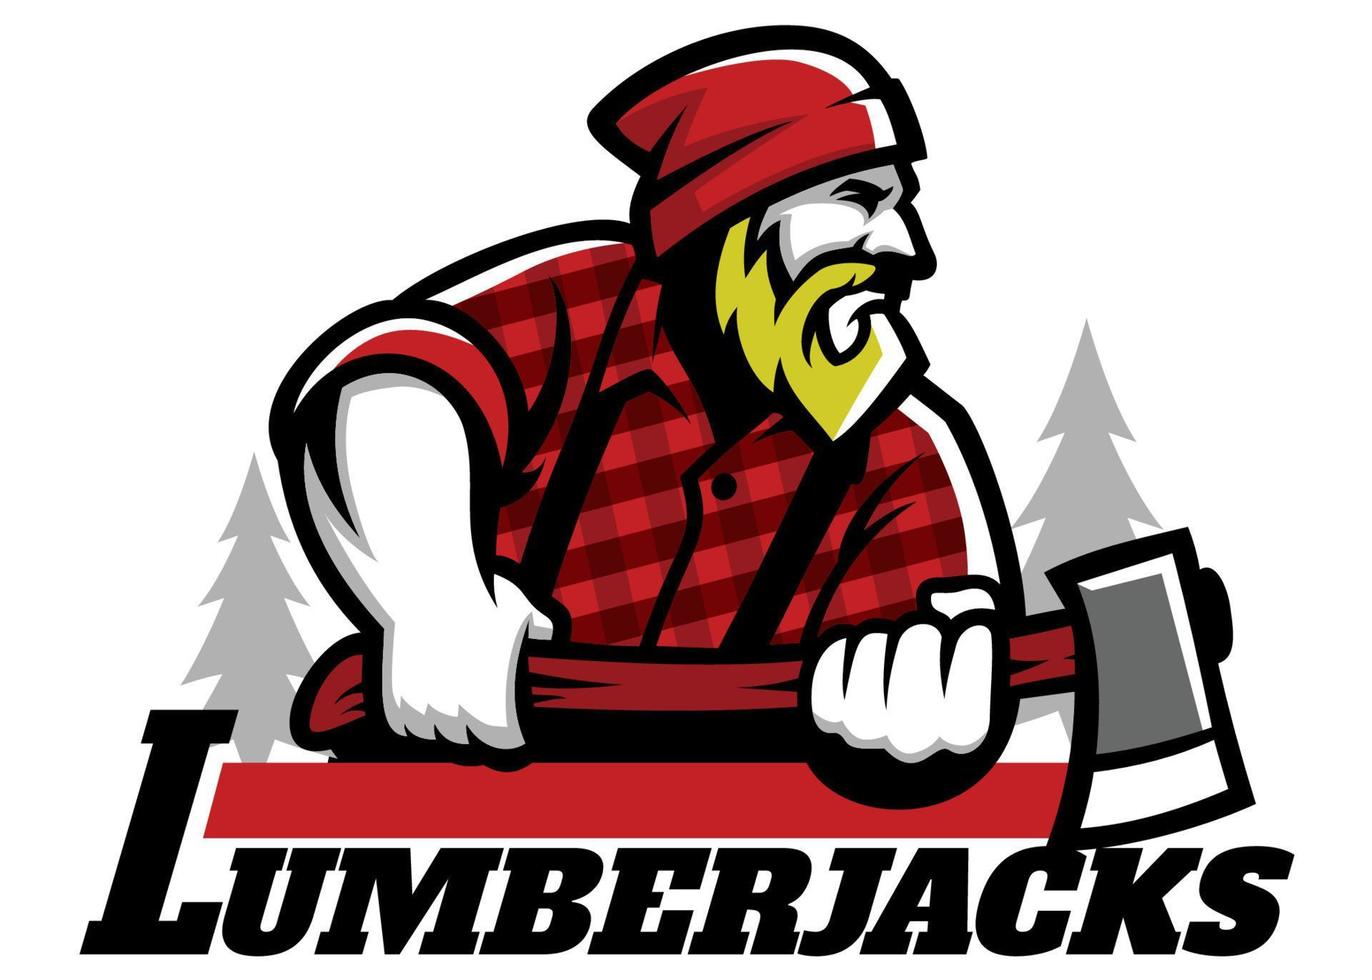 lumberjack mascot holding the axe vector